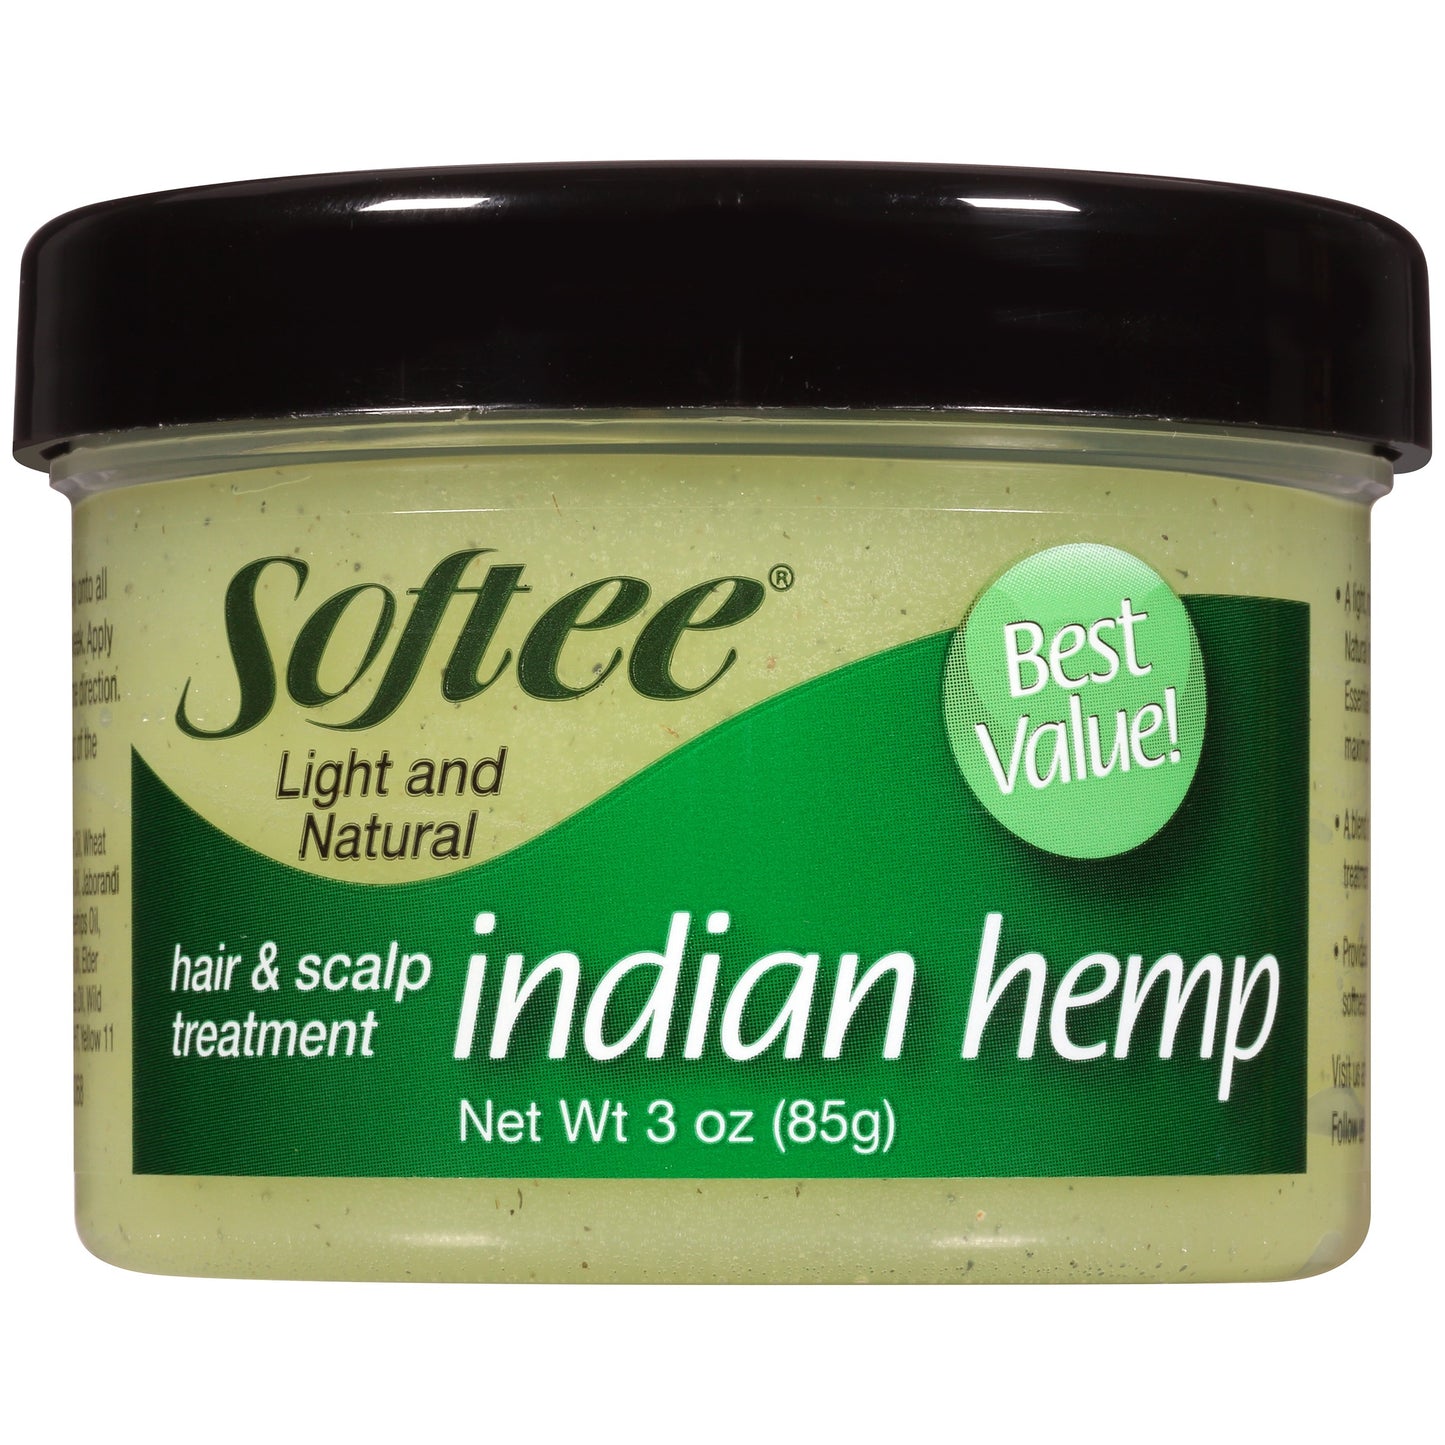 Softee Indian Hemp